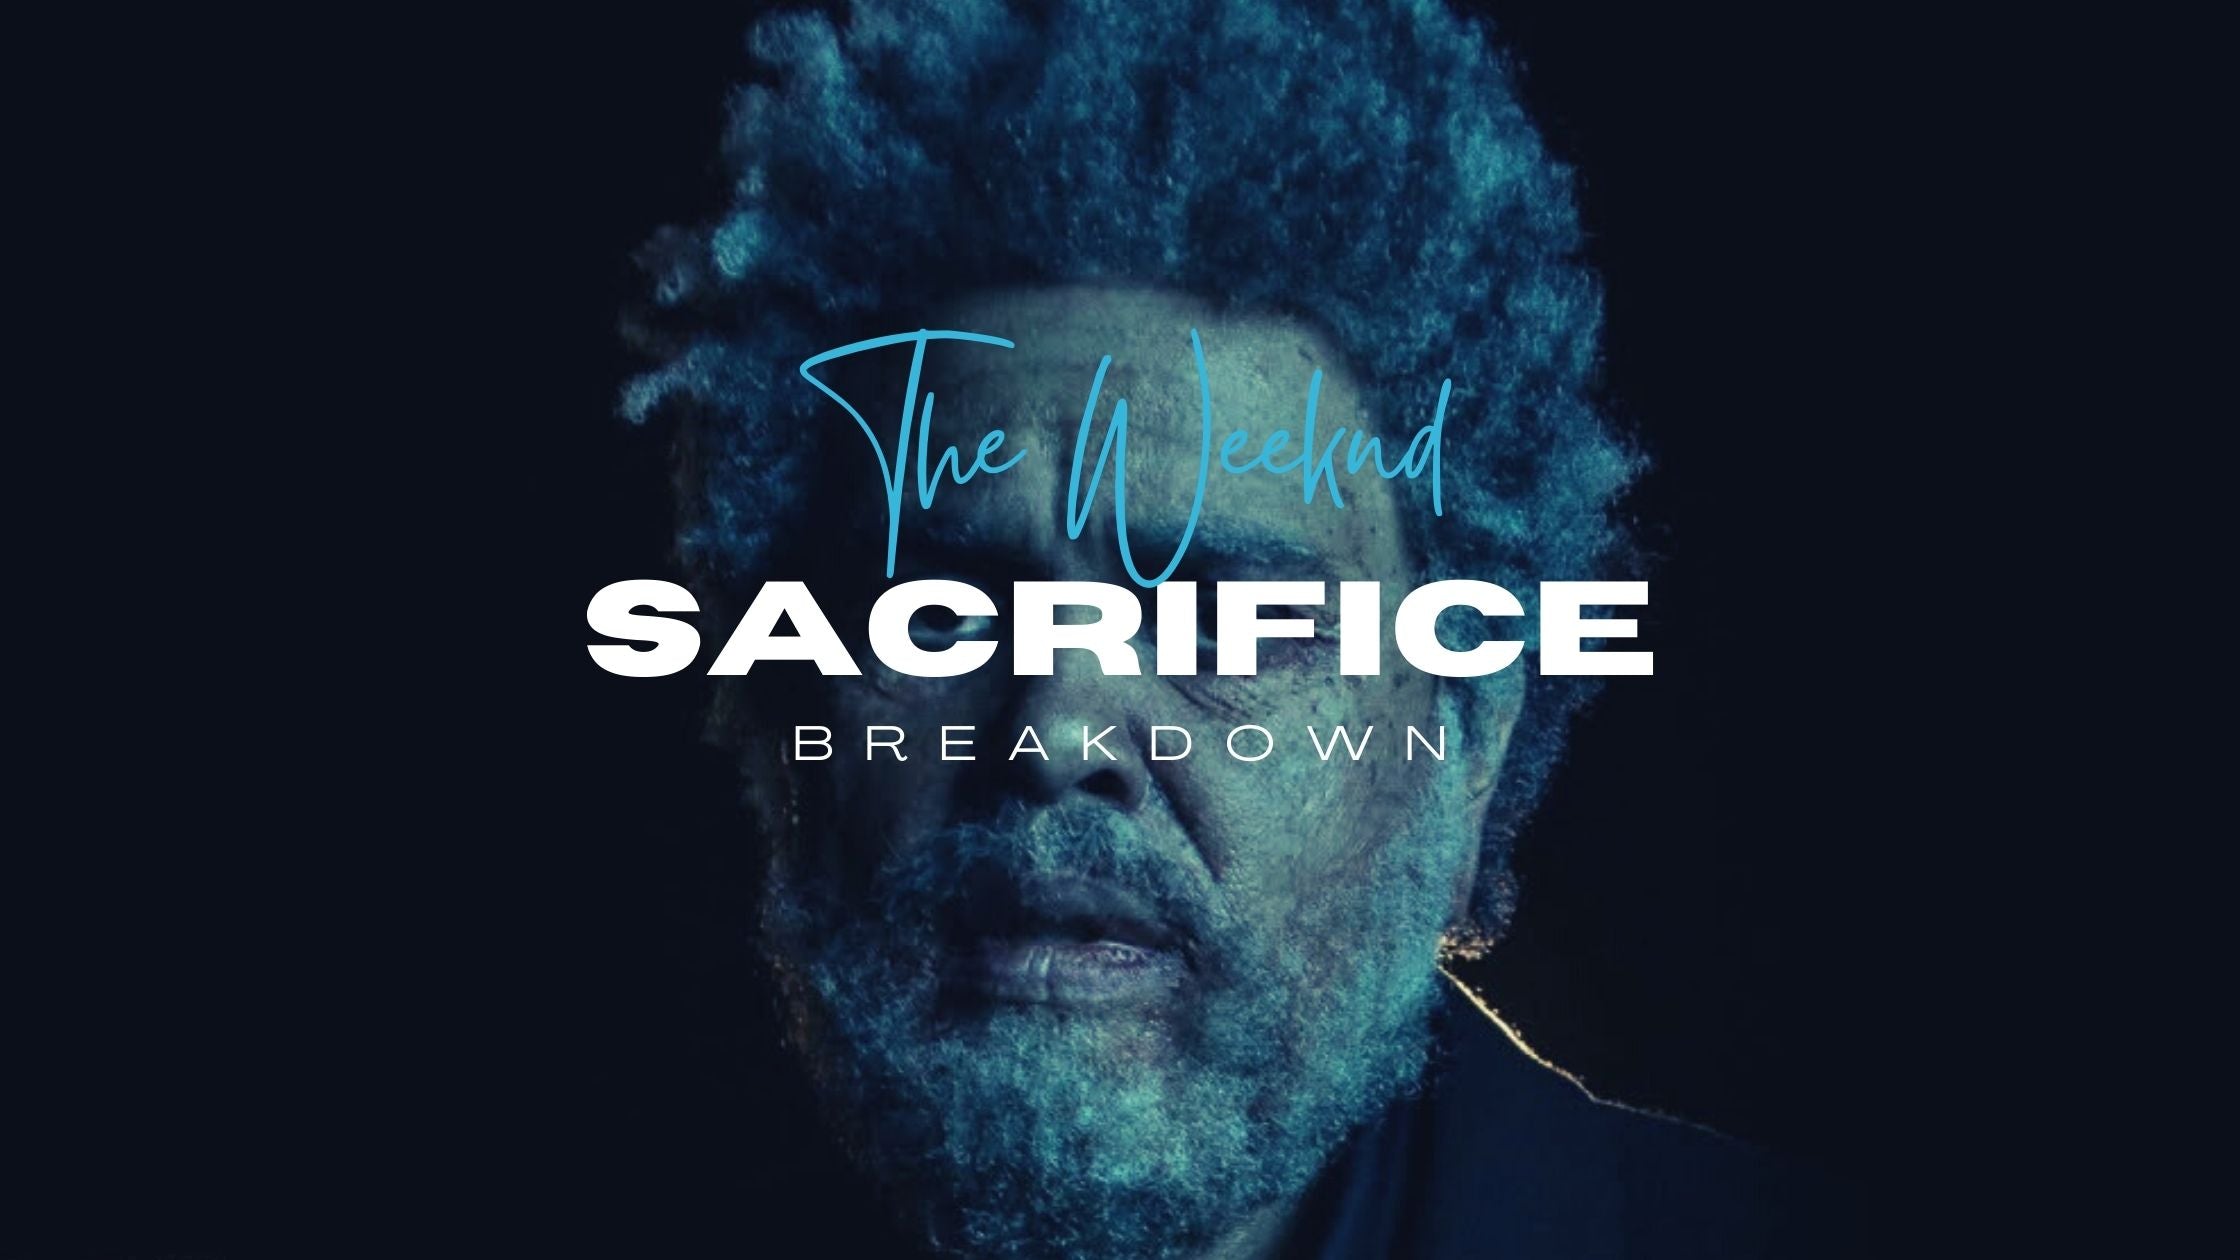 The Weeknd - Sacrifice Ableton Remake (Pop) – Top Music Arts